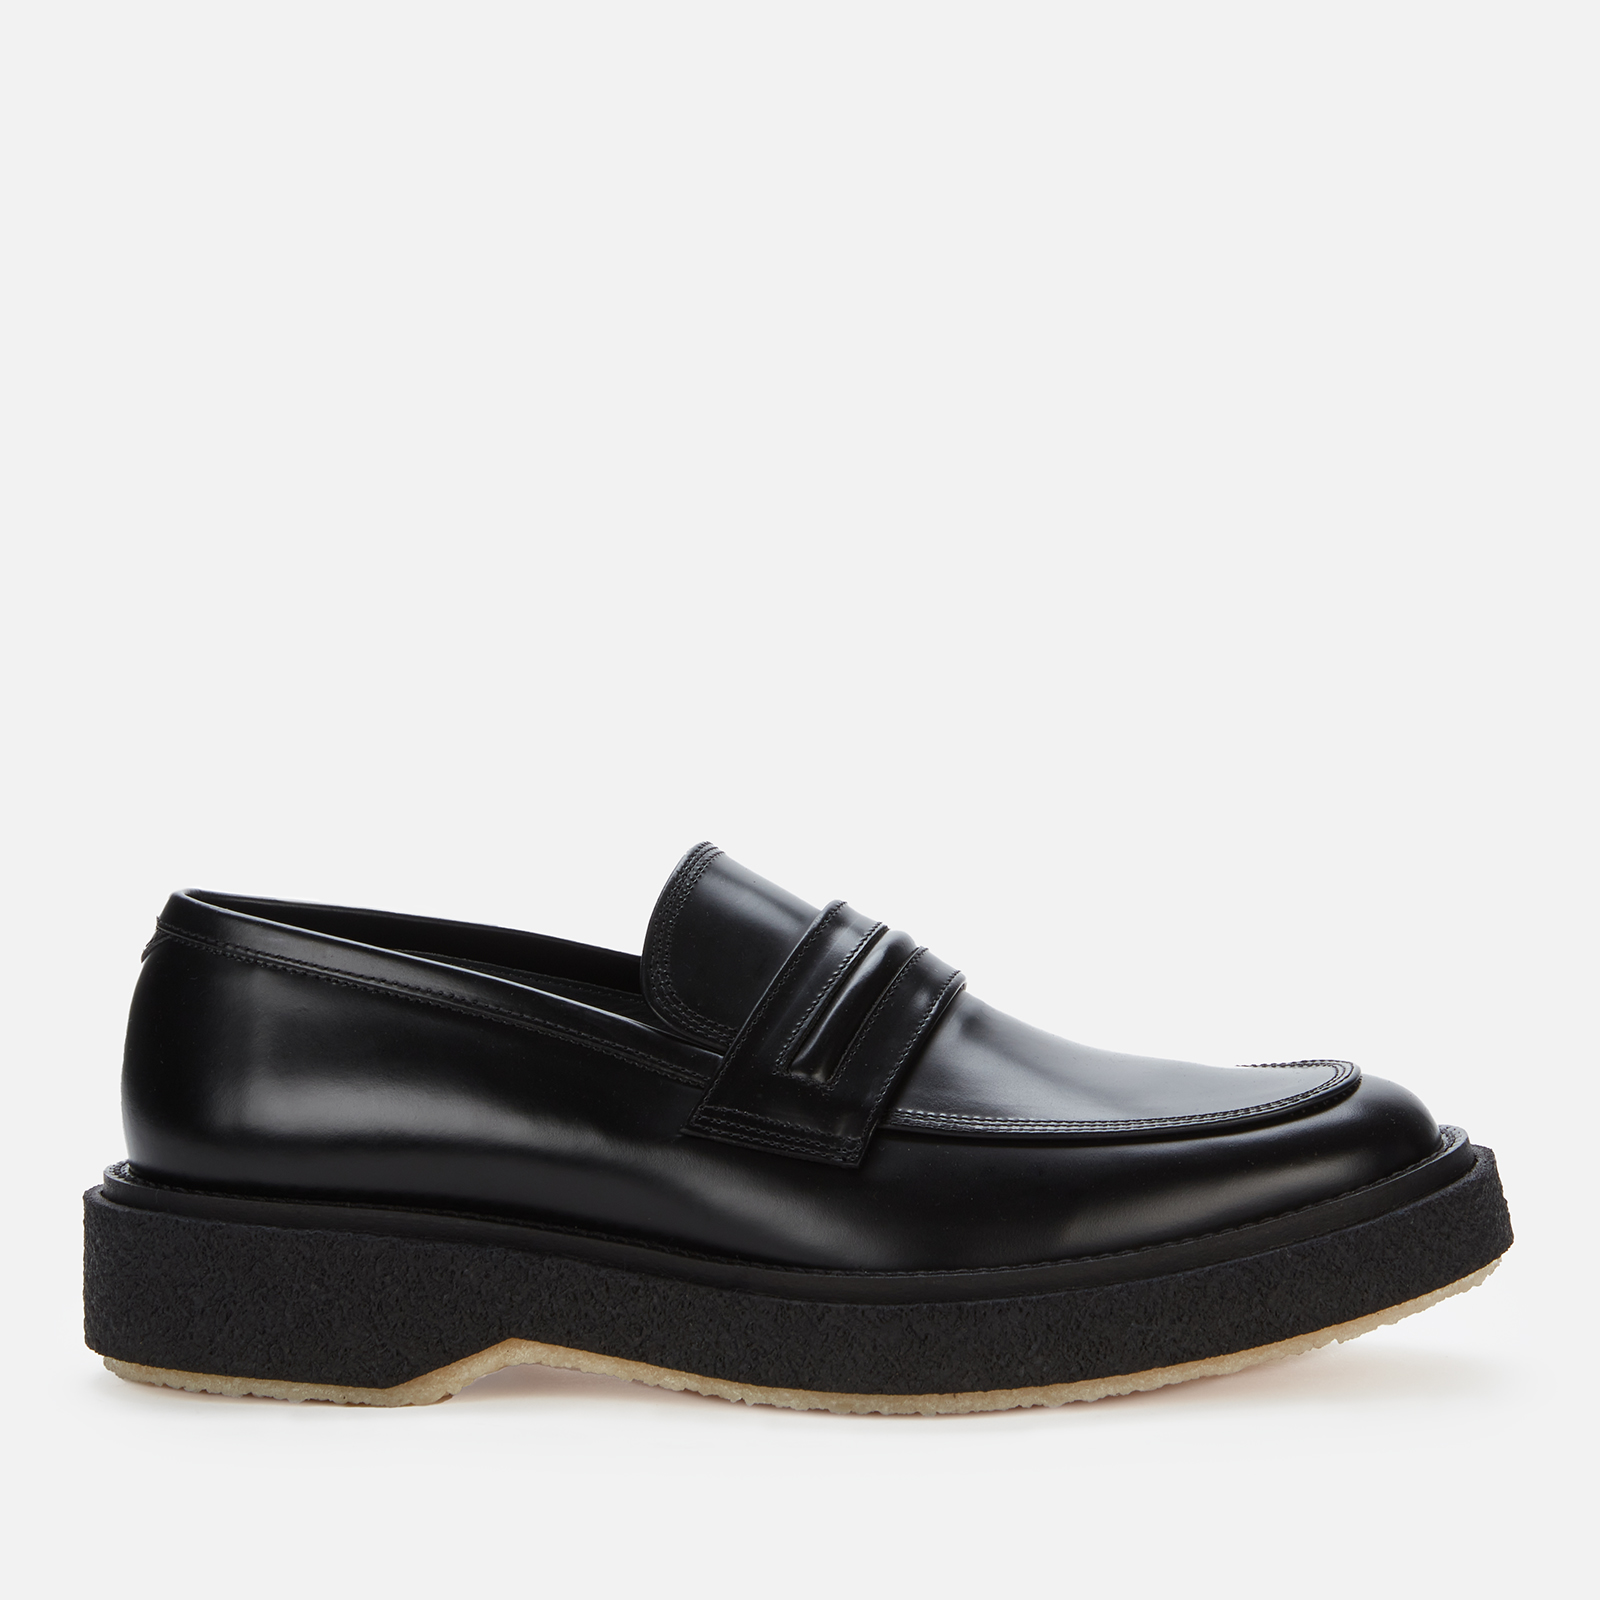 【人気好評】Adieu paris Type 147 Leather Loafers 靴